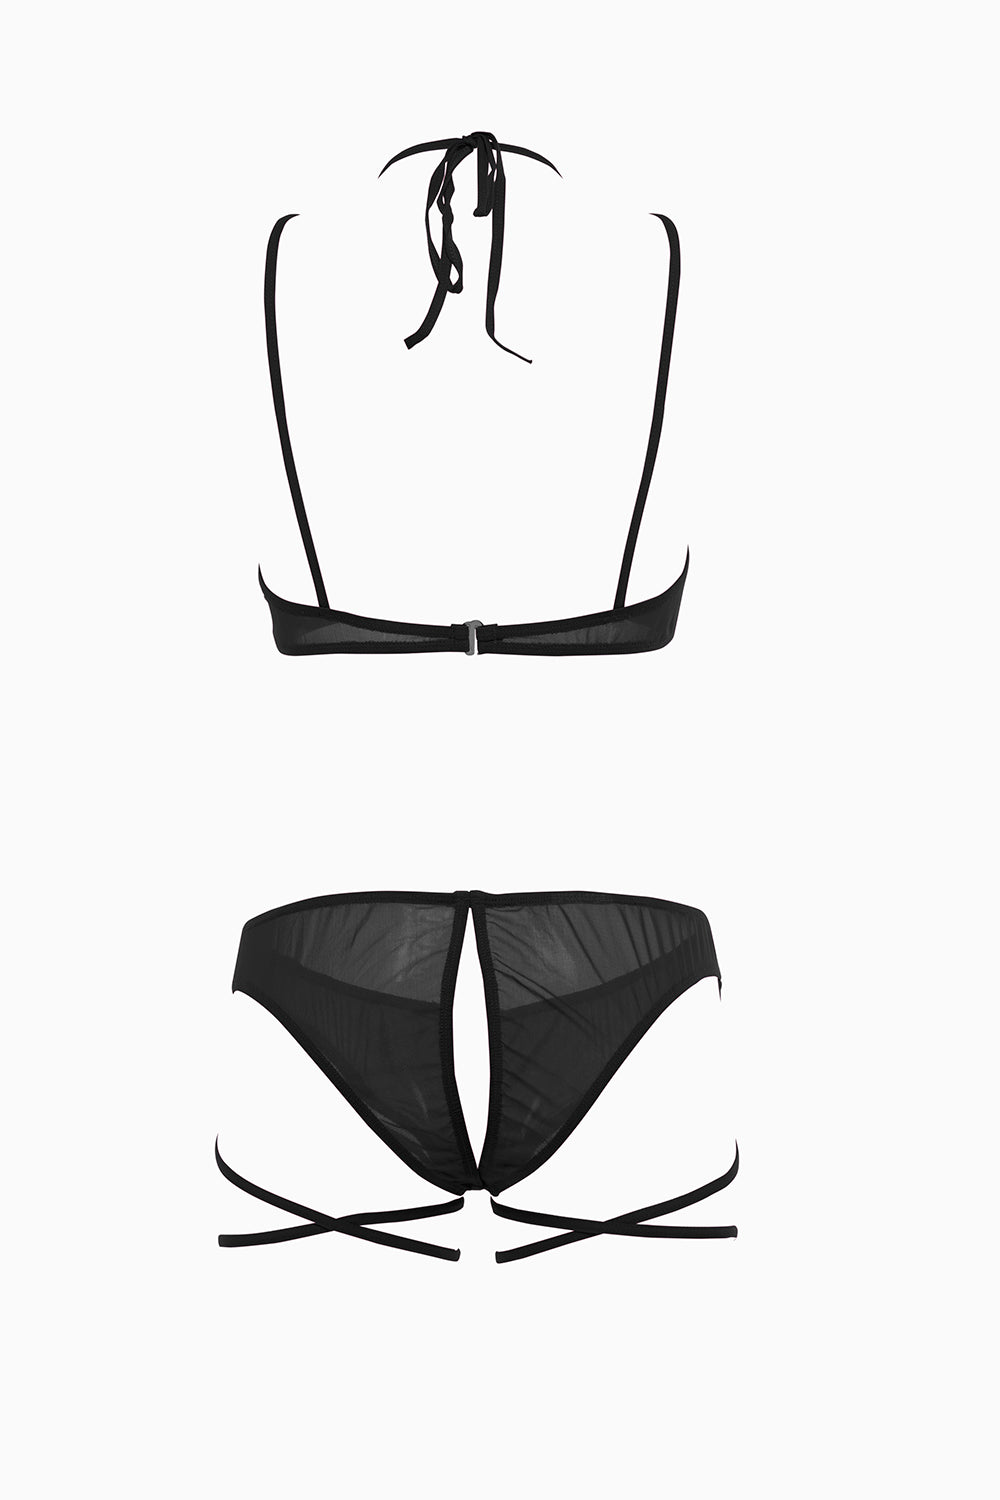 Allure Collection Monique Open Bra & G-String Set with Criss Cross Thigh Straps Black